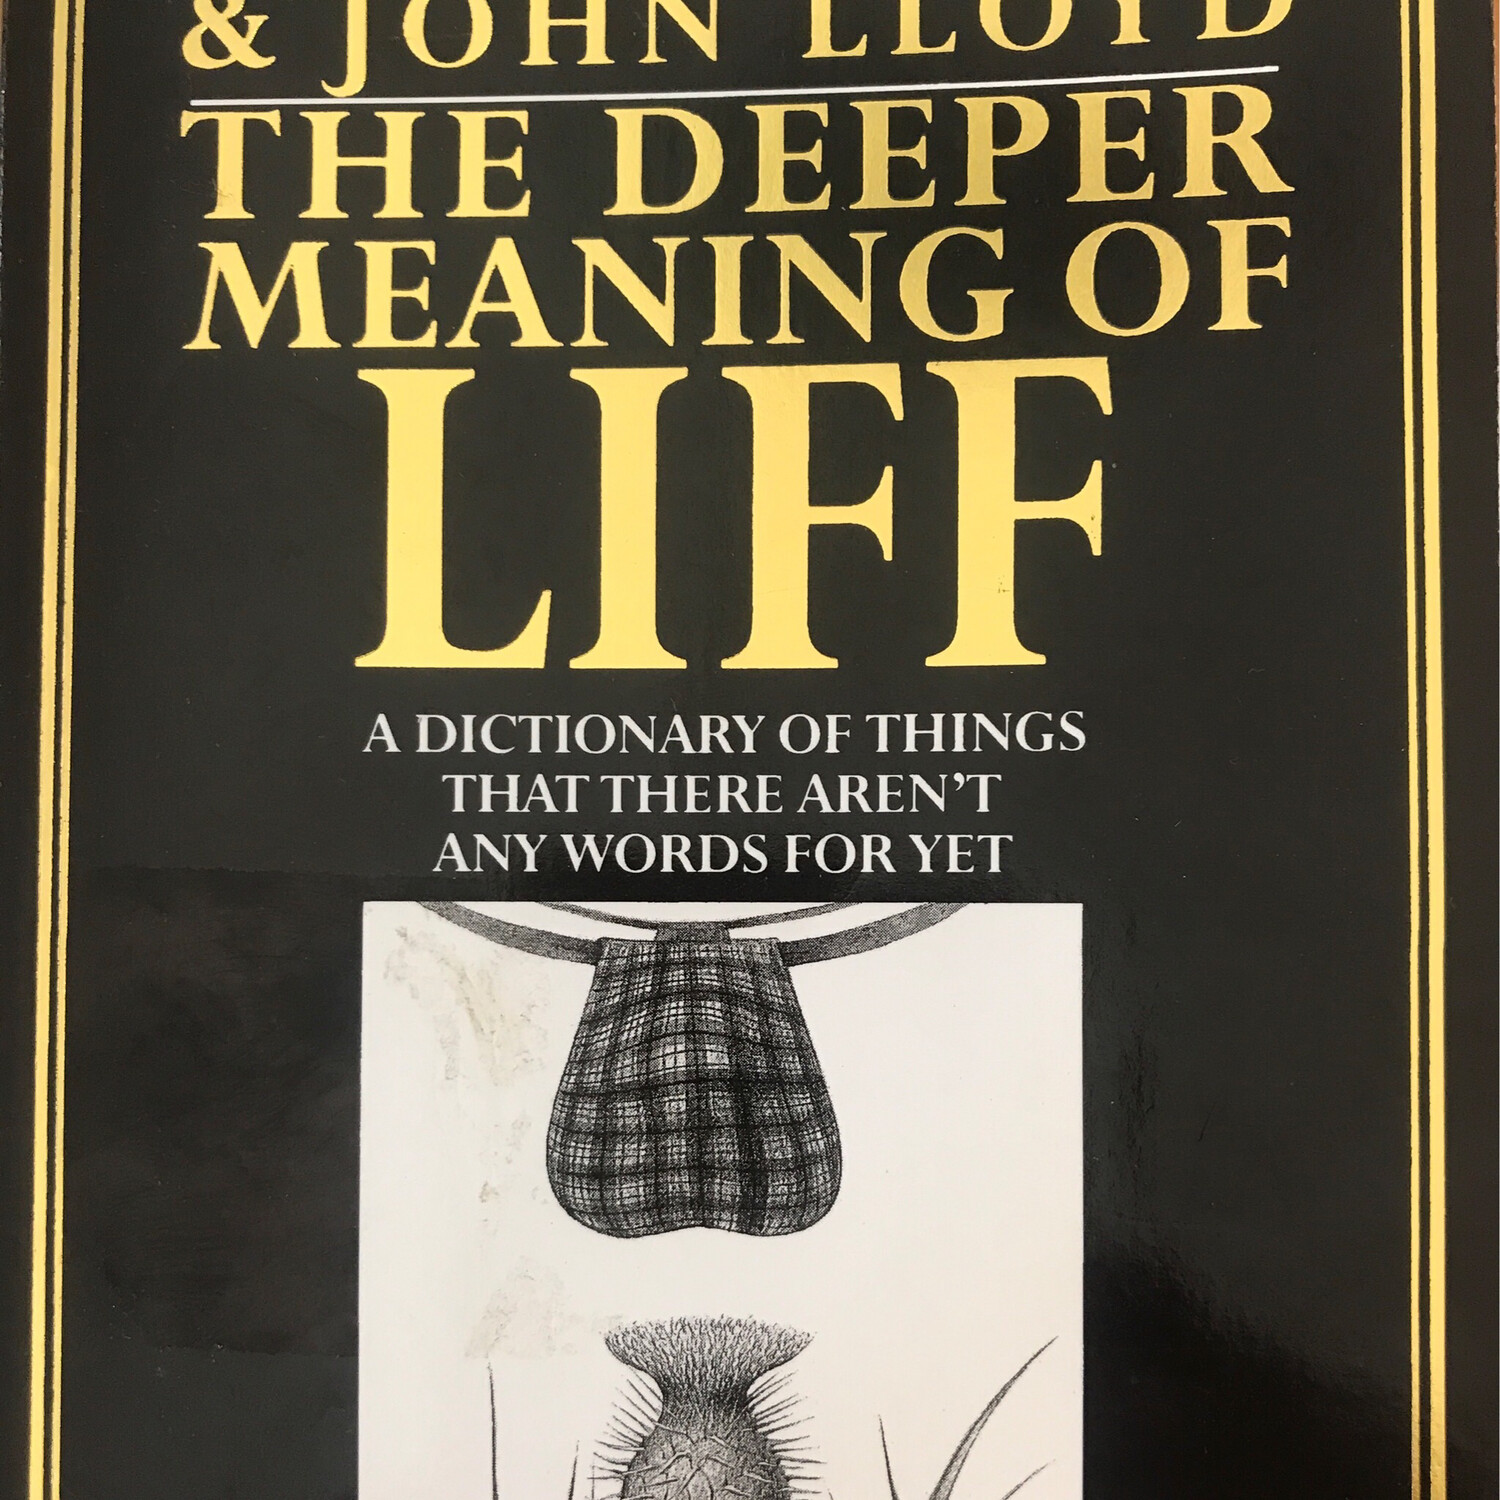 The Deeper Meaning Of Liff, Douglas Adams And John Lloyd